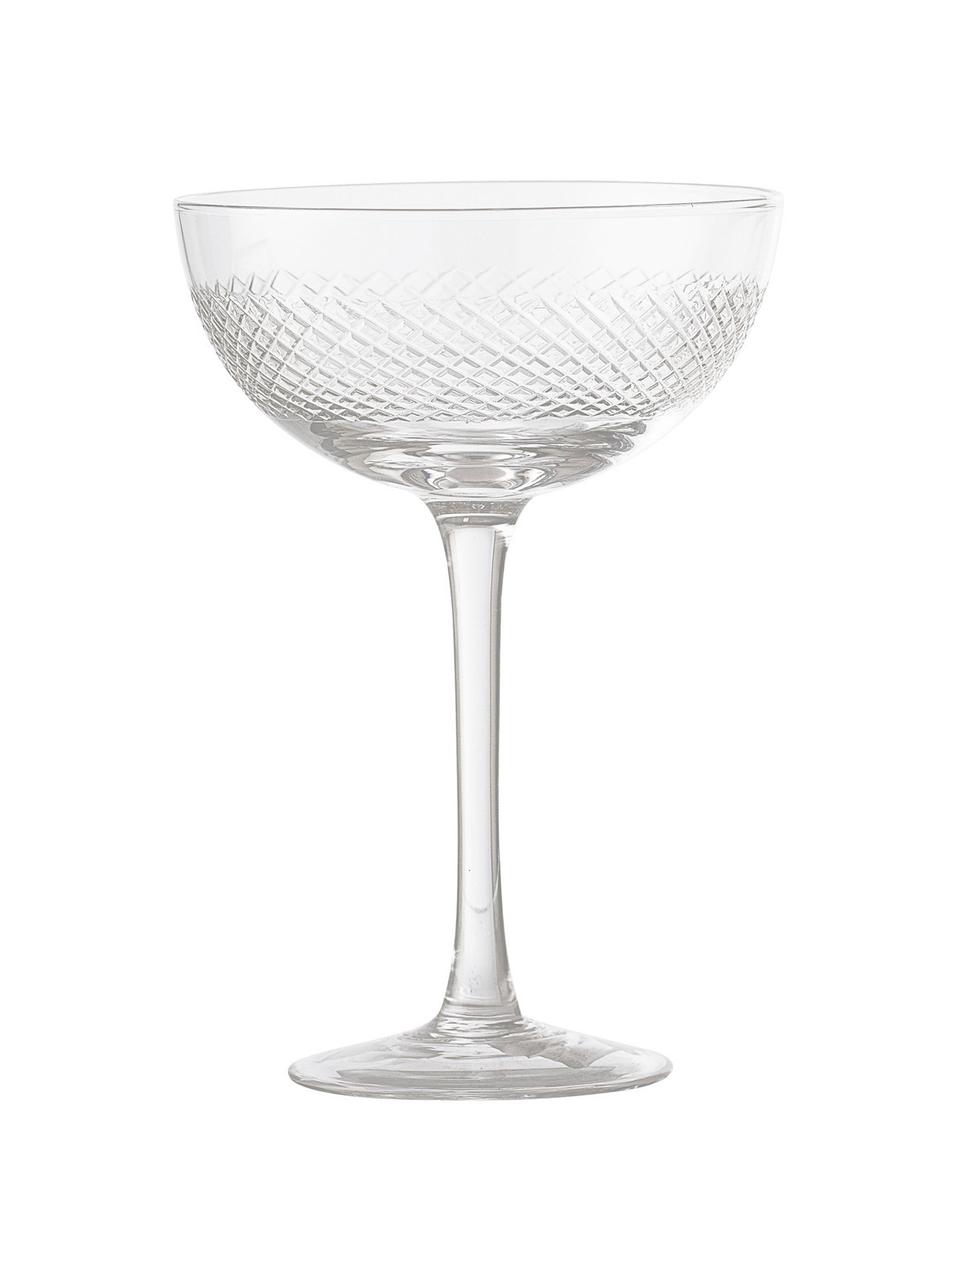 Coppa da champagne Serena 6 pz, Vetro, Trasparente, bianco, Ø 12 x A 16 cm